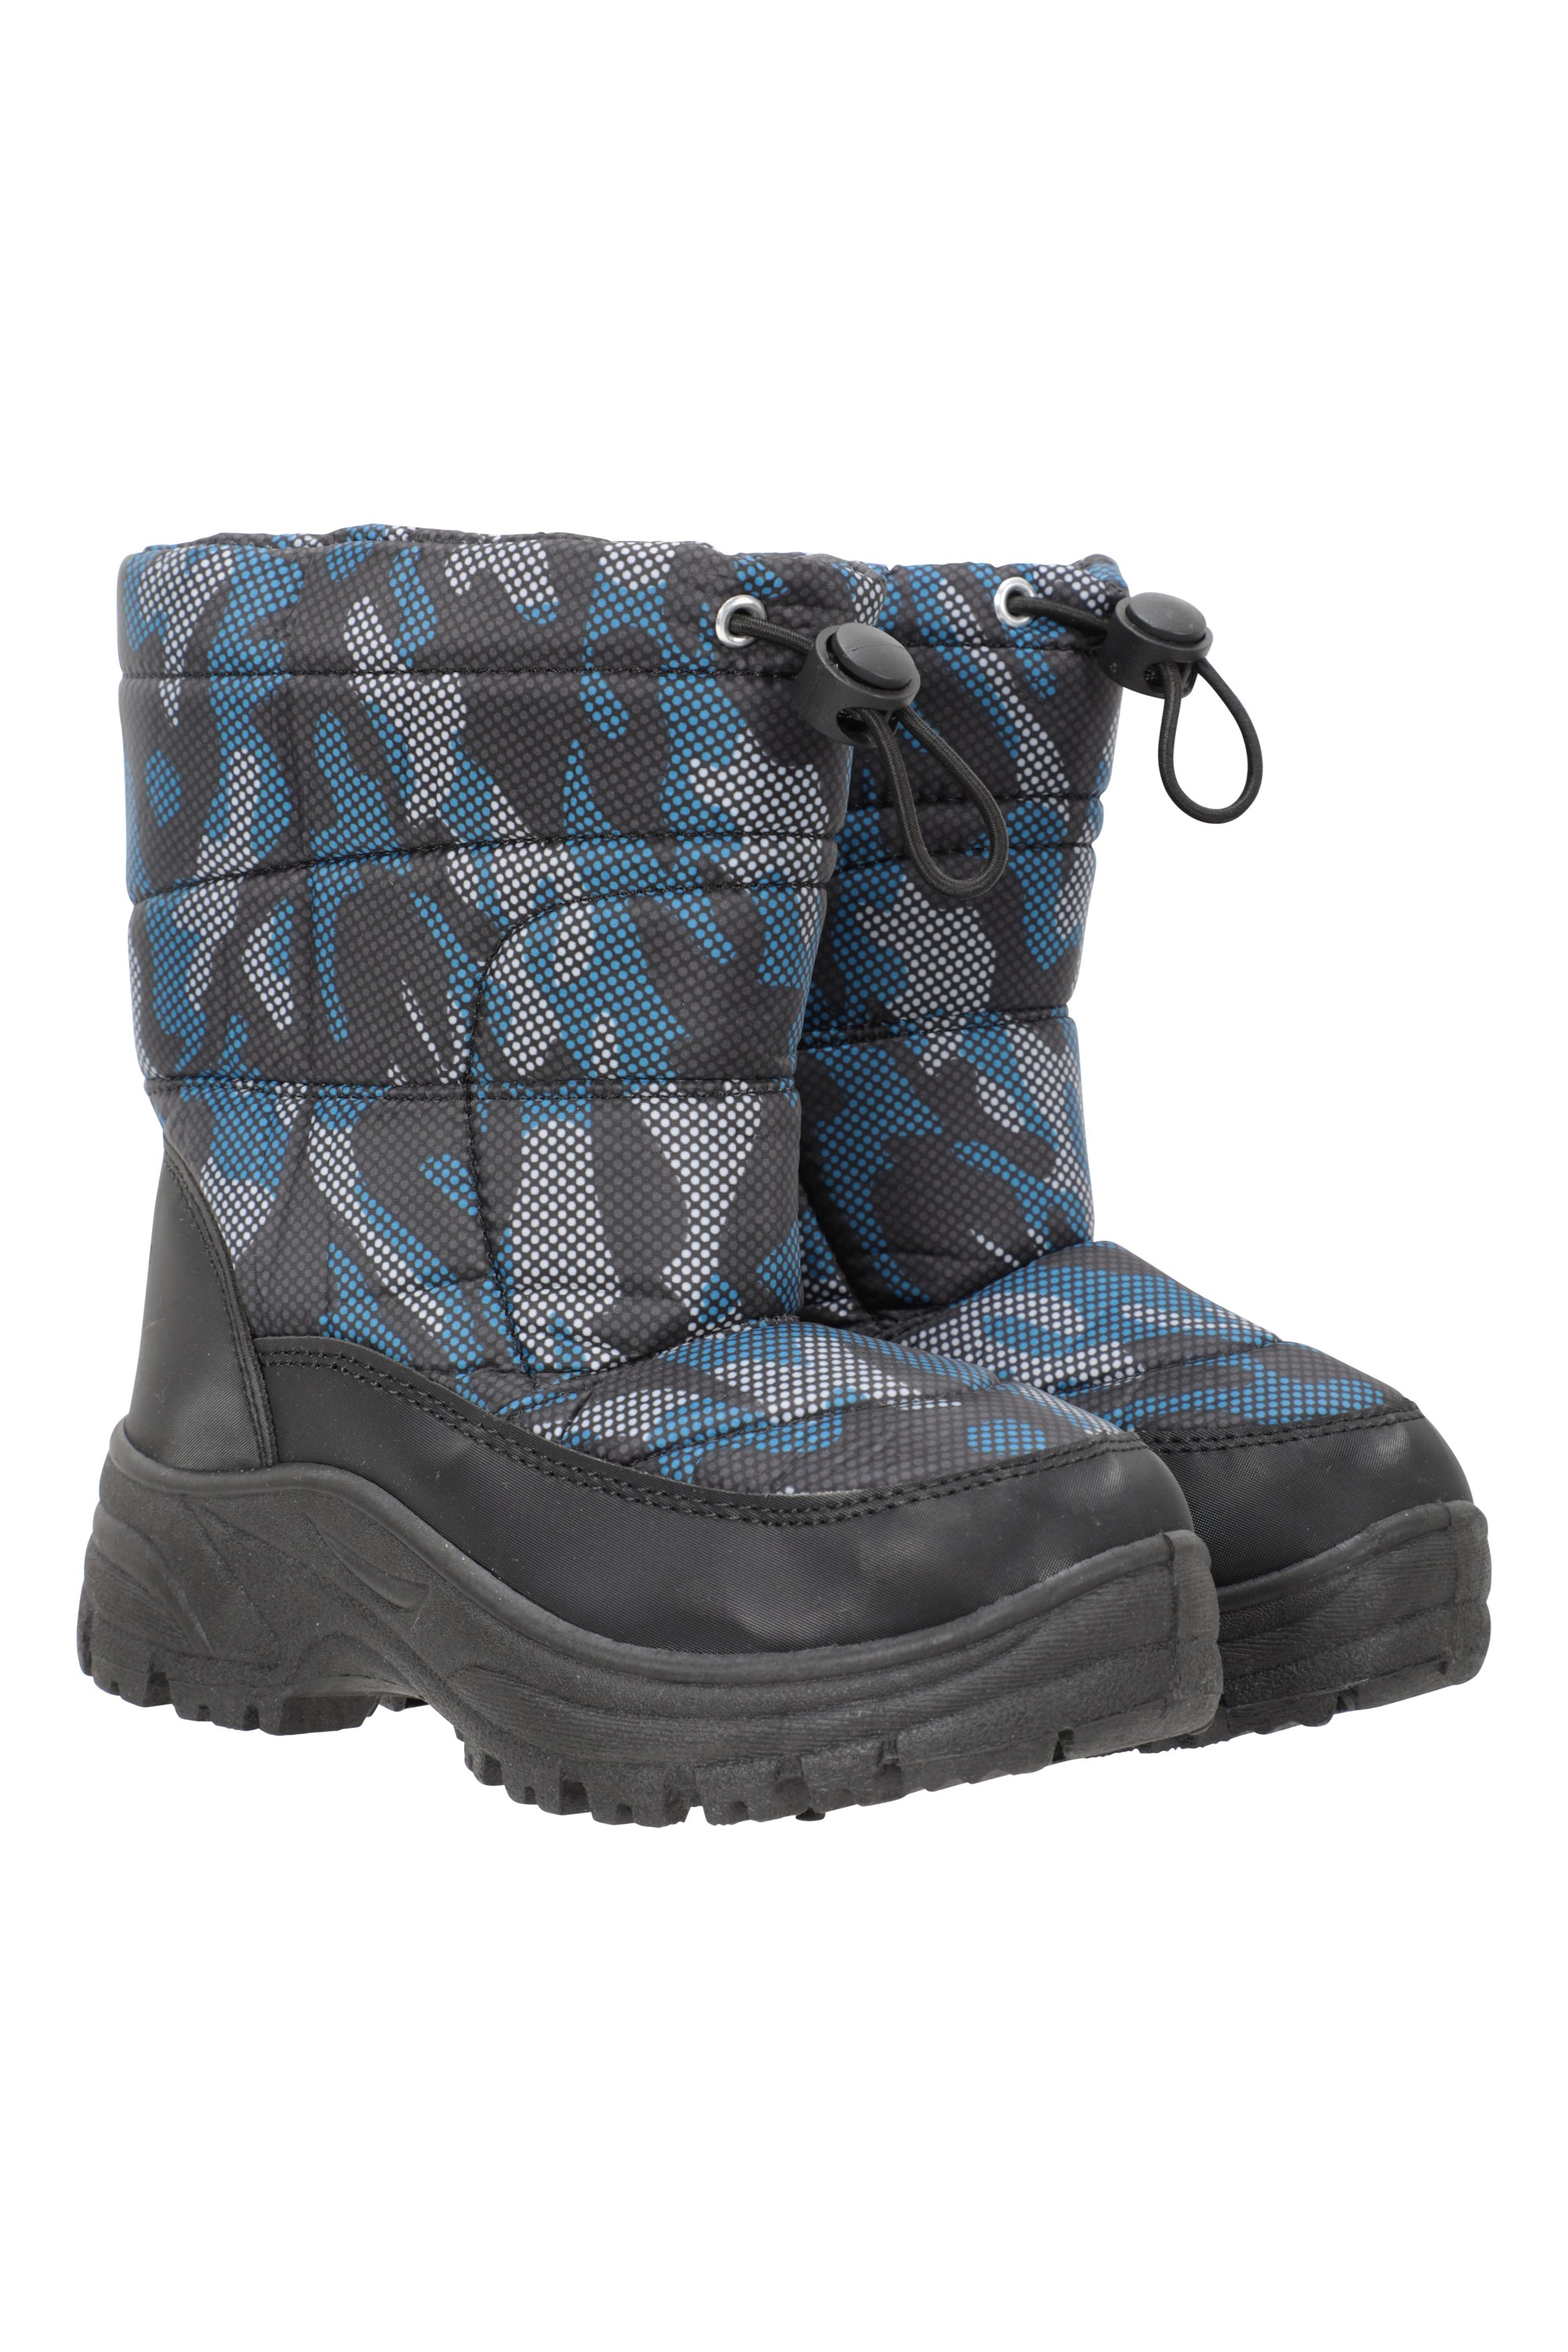 Caribou Toddler Adaptive Printed Snow Boots - Black